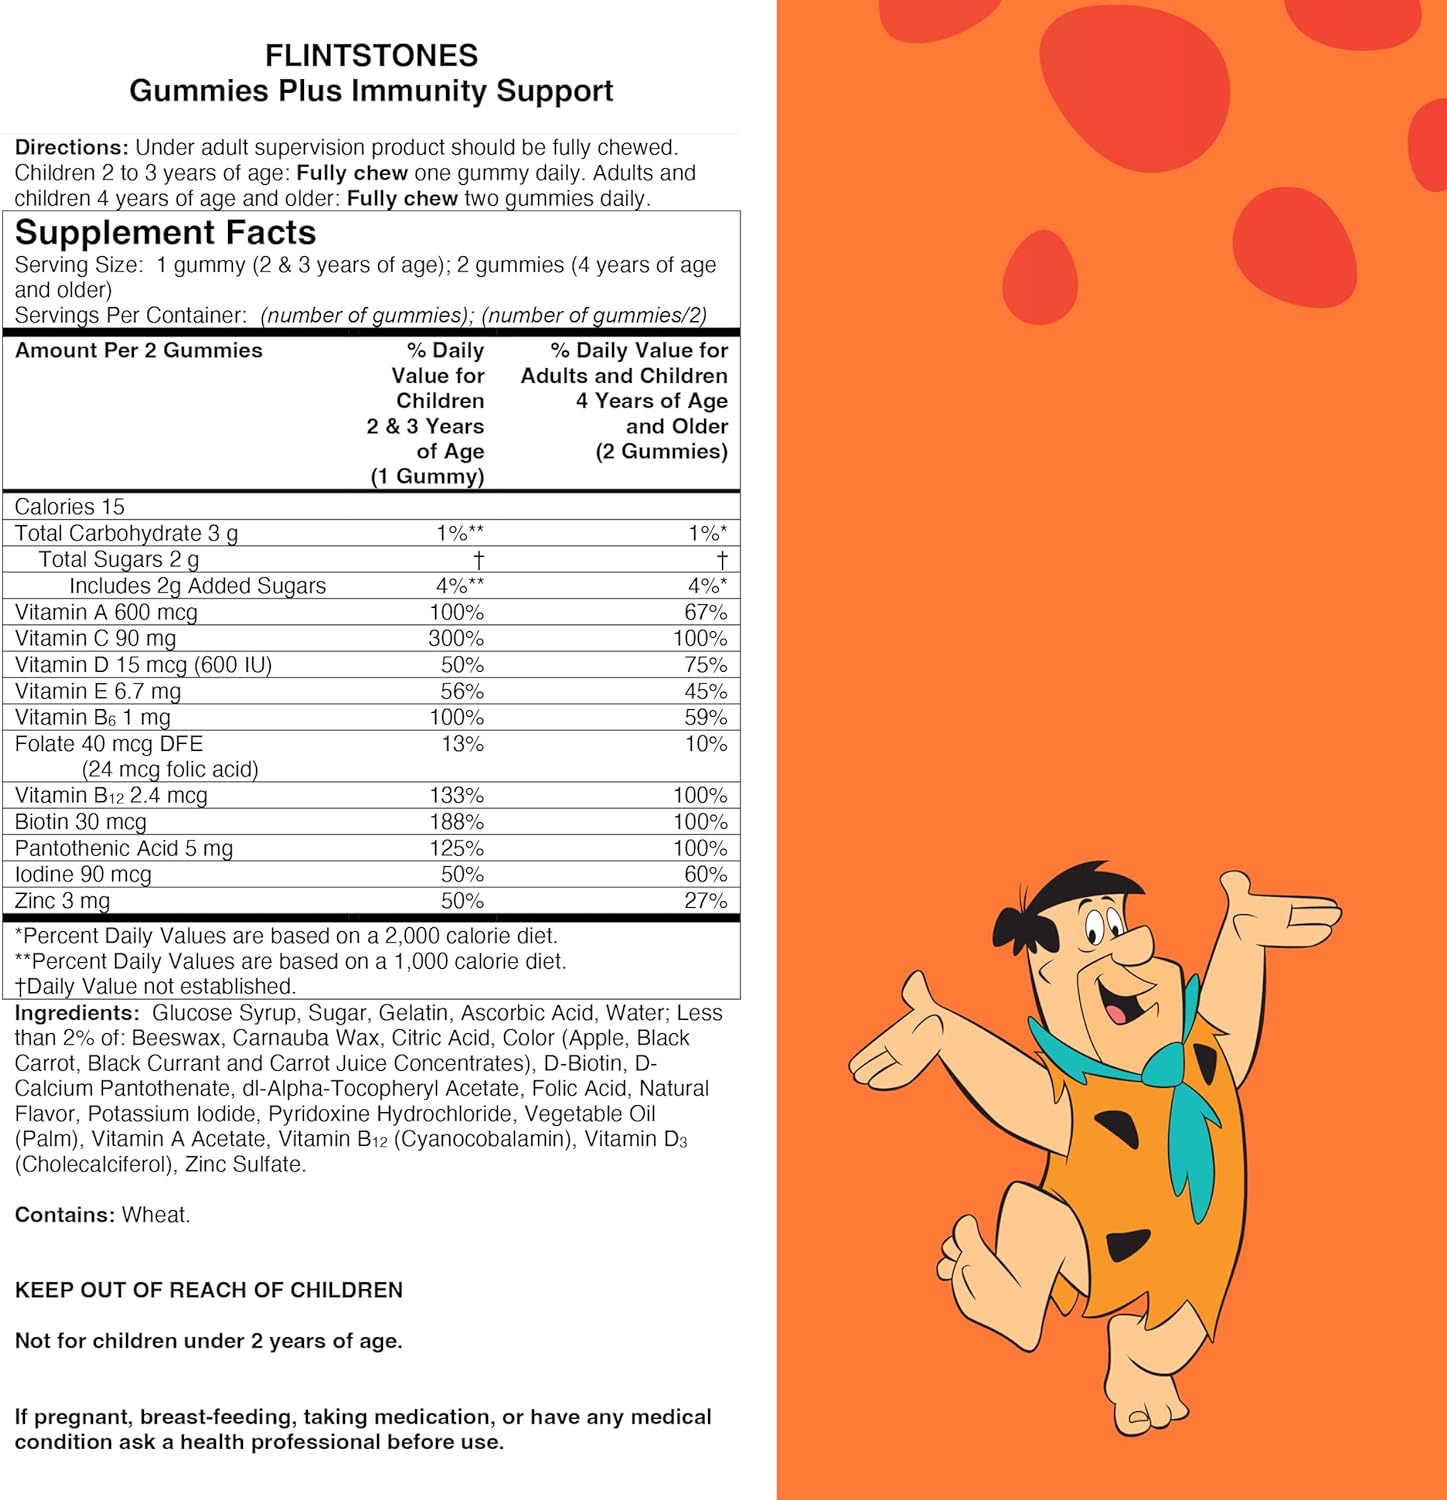 Flintstones Gummies Kids Vitamins with Immunity Support*, Kids and Toddler Multivitamin with Vitamin C, Vitamin D, B12, Zinc  more, Orange 150ct